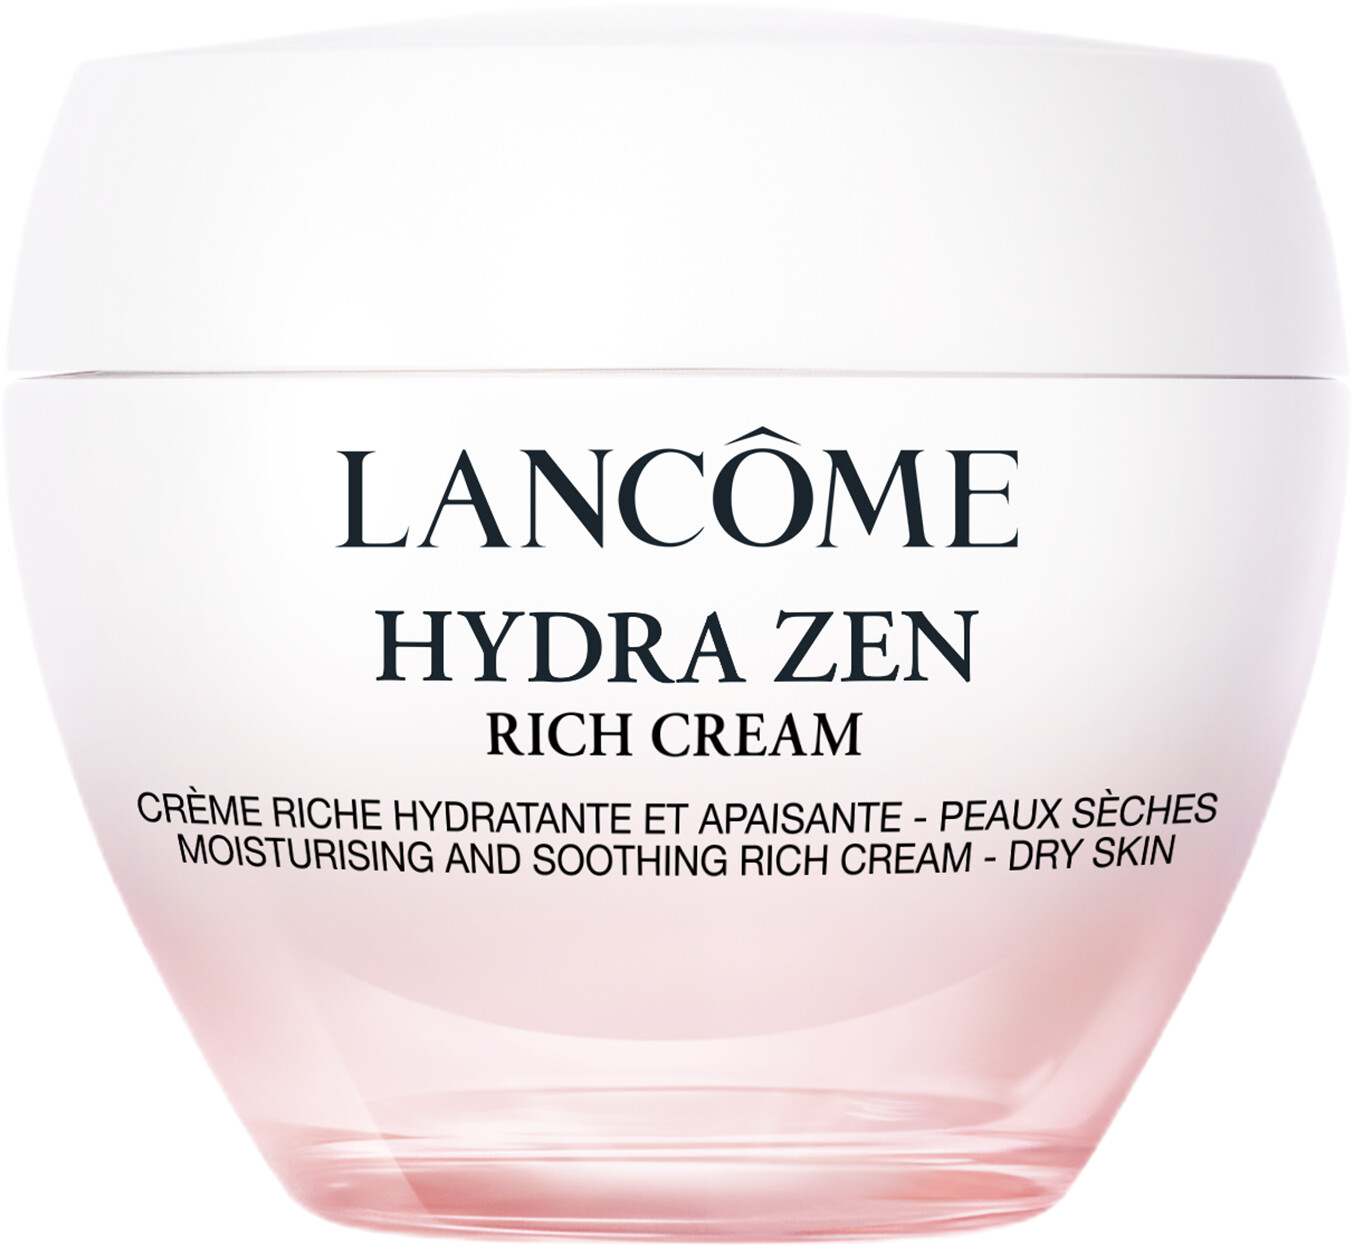 Lancome Hydra Zen Moisturising and Soothing Rich Cream - Dry Skin 50ml